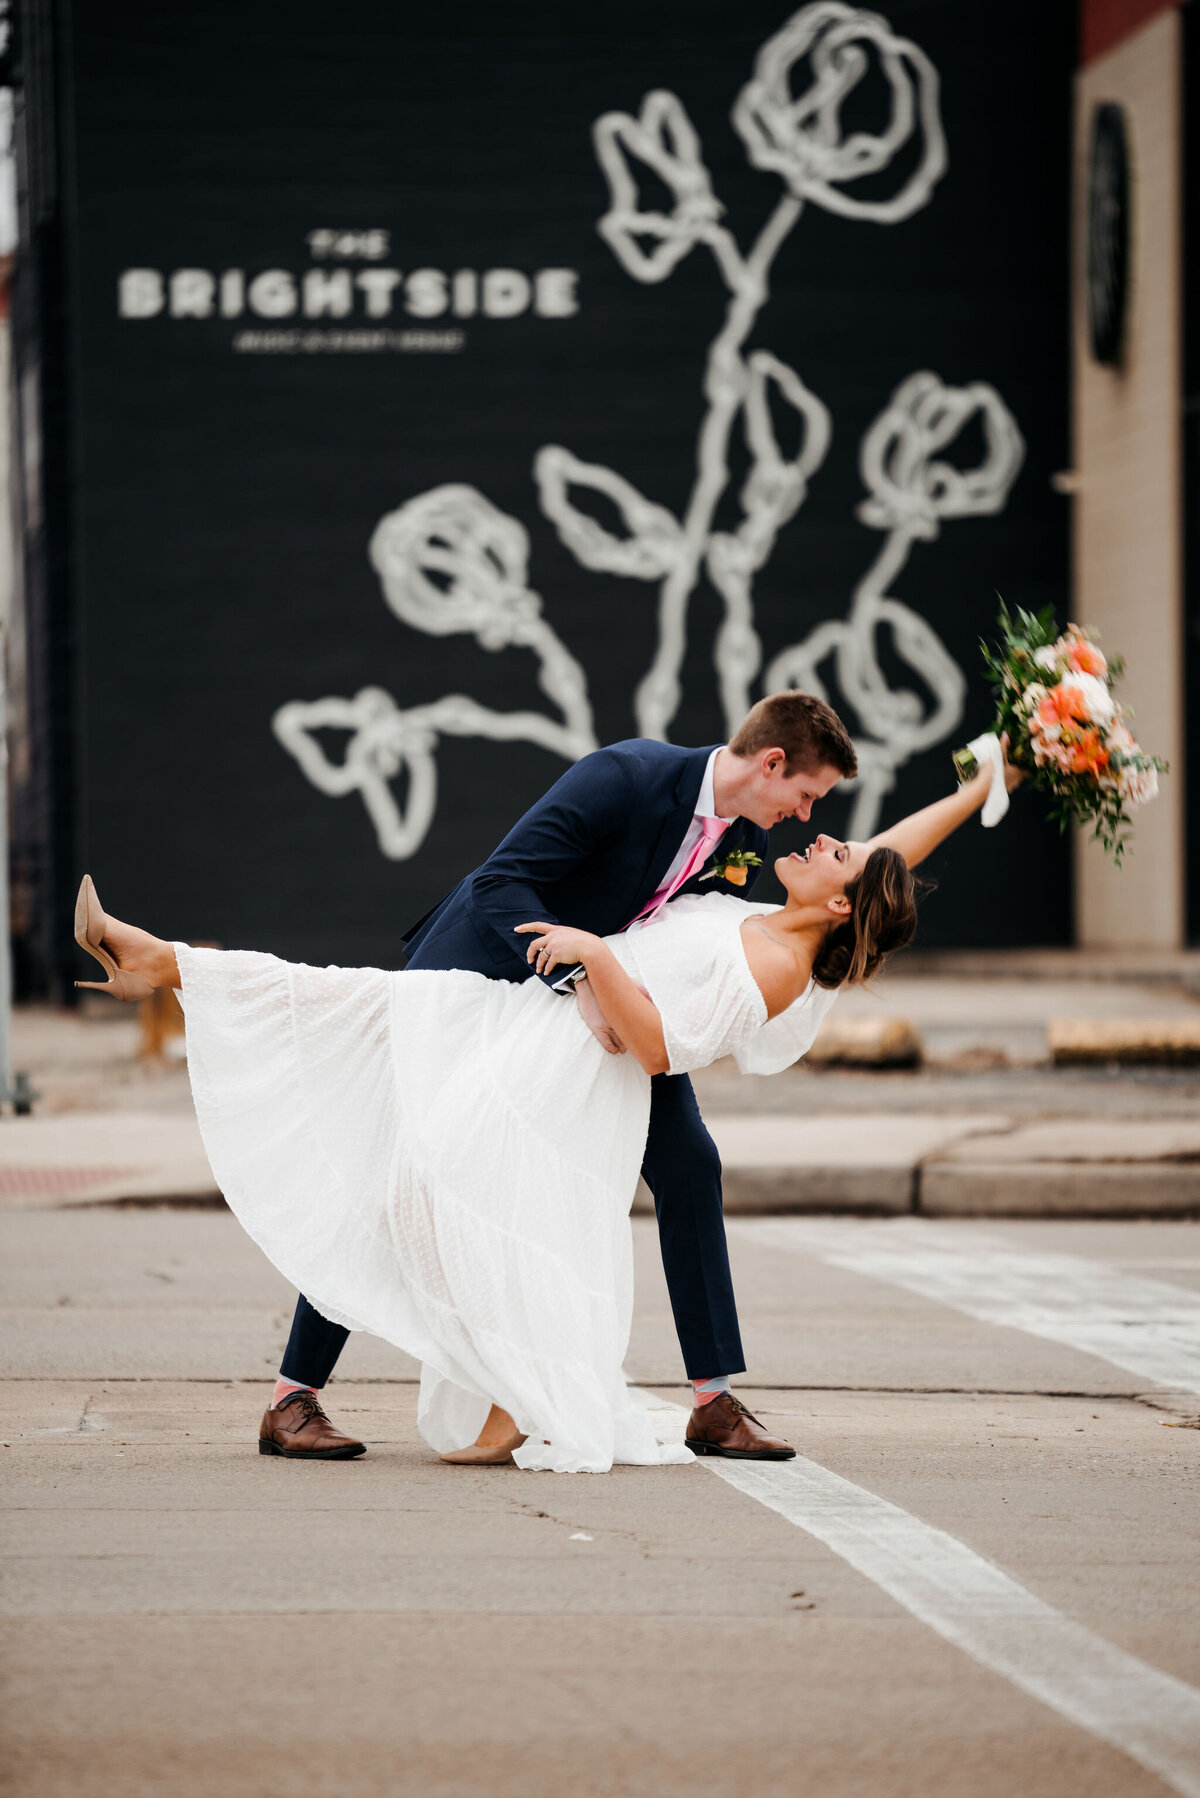 brightside-venue-dayton-ohio-wedding-photographer-videographer-floral-v-designs-couple